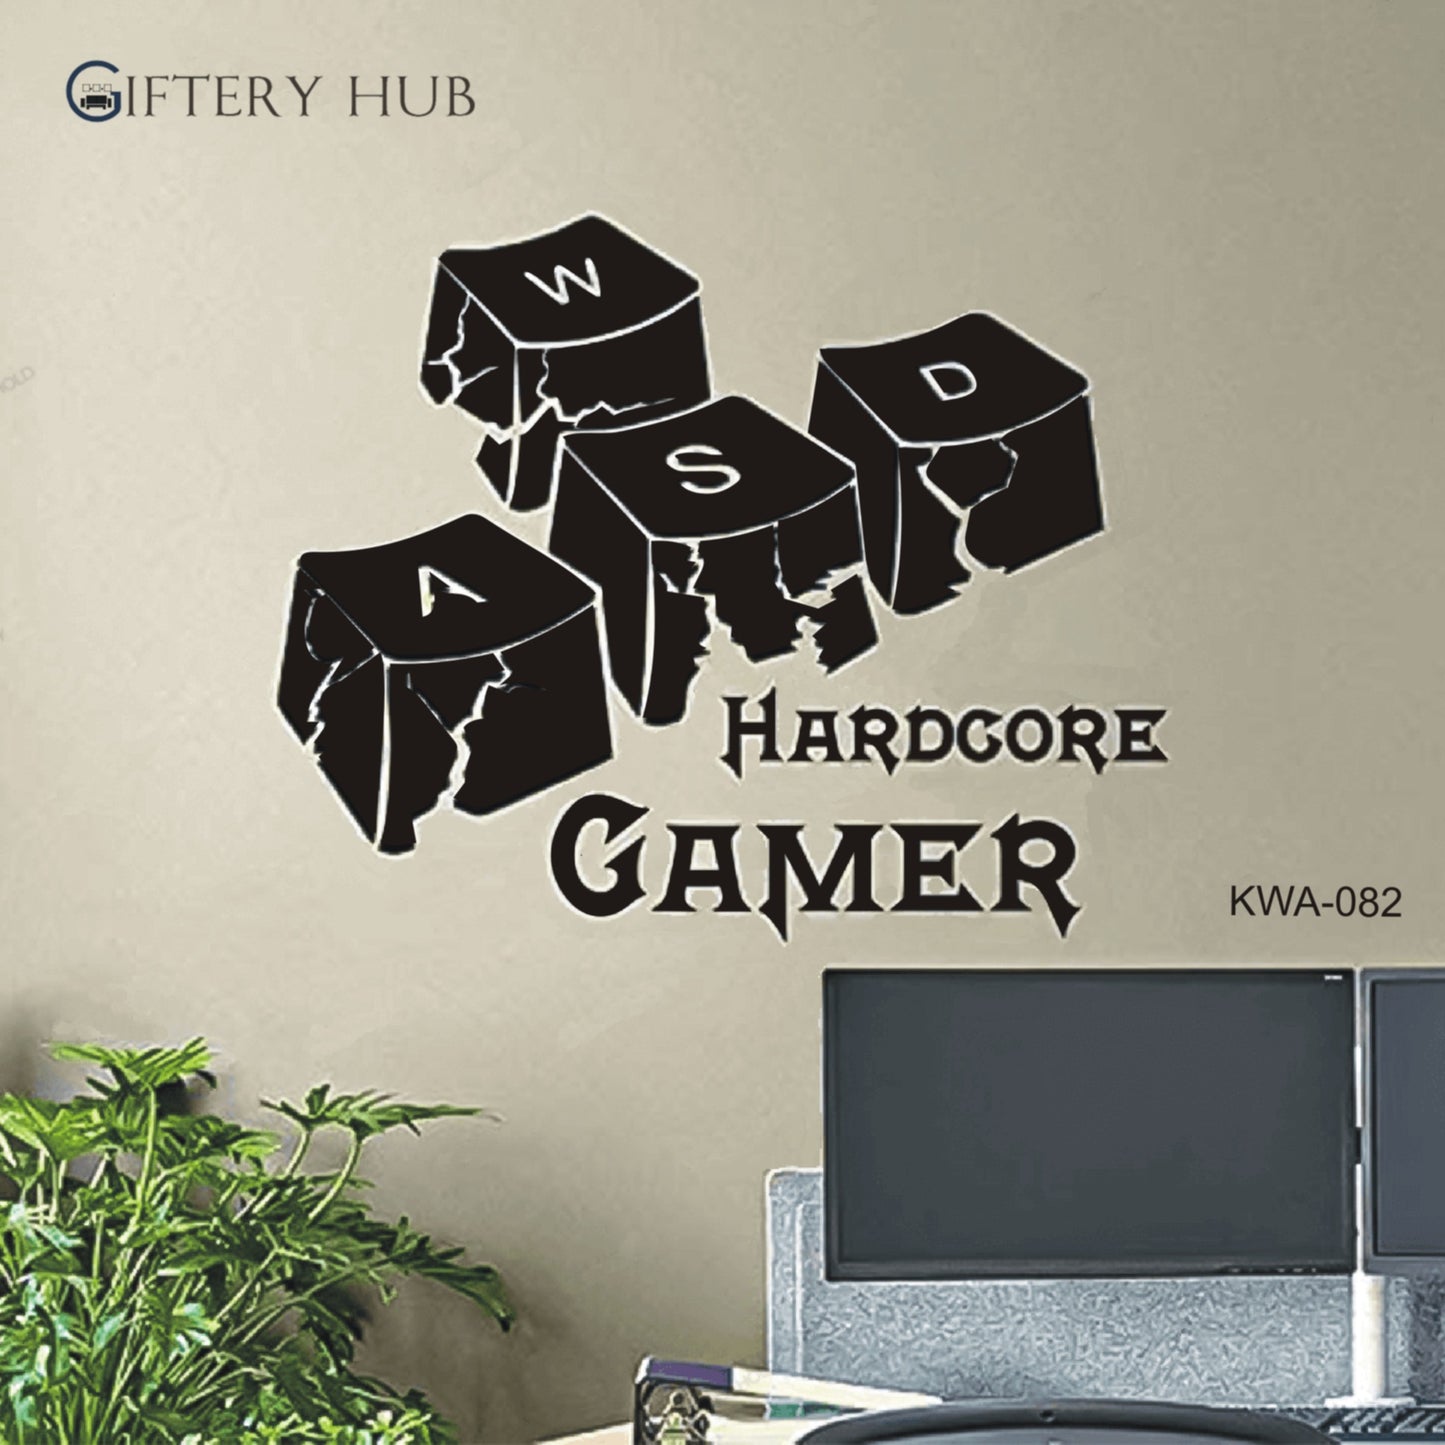 Hardcore Gamer Keyboard Keys Gamer for home and office decor - KWA-082